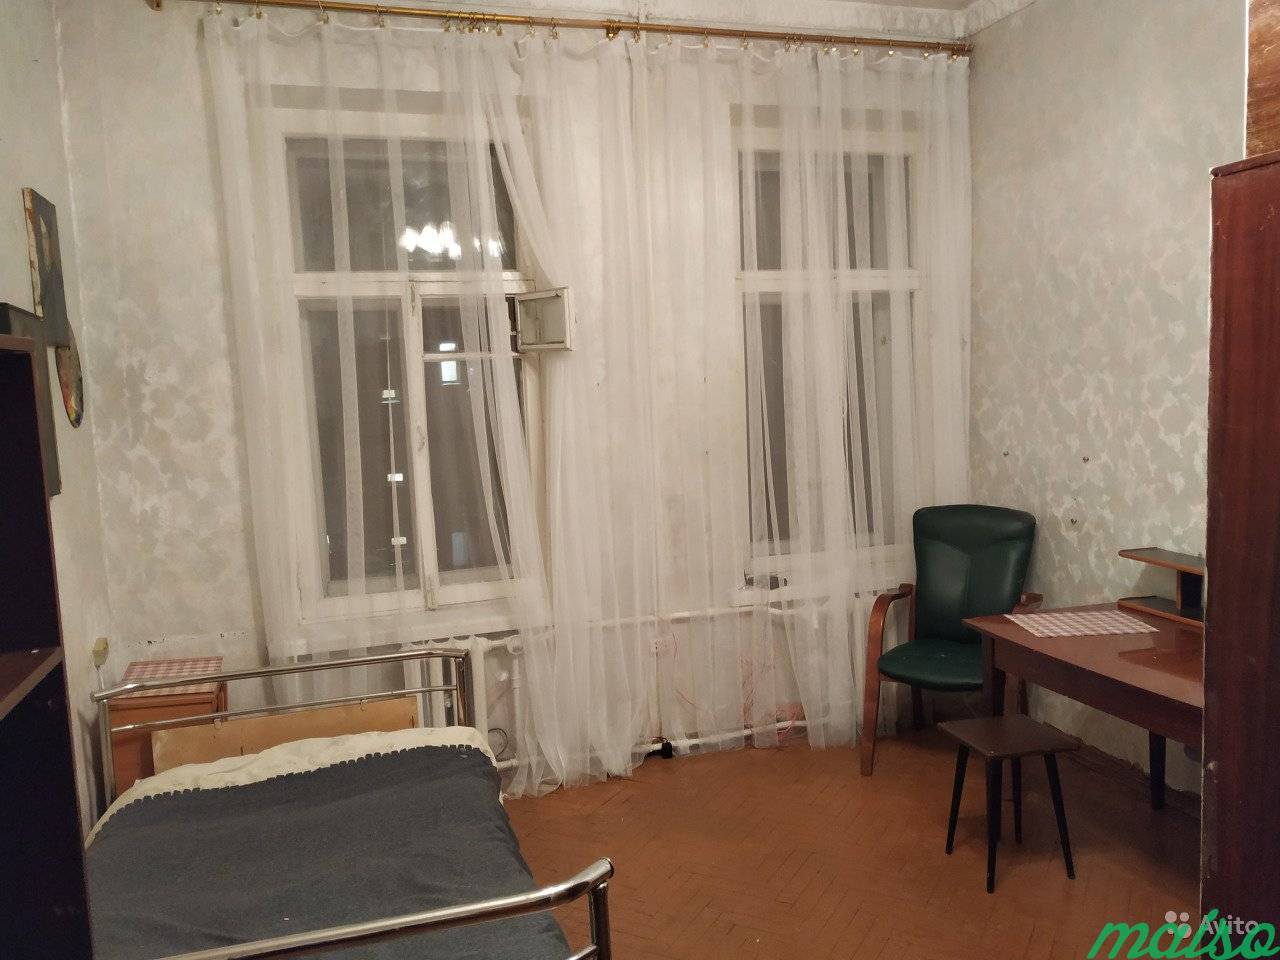 Комната 20 м² в 5-к, 6/7 эт. в Санкт-Петербурге. Фото 1